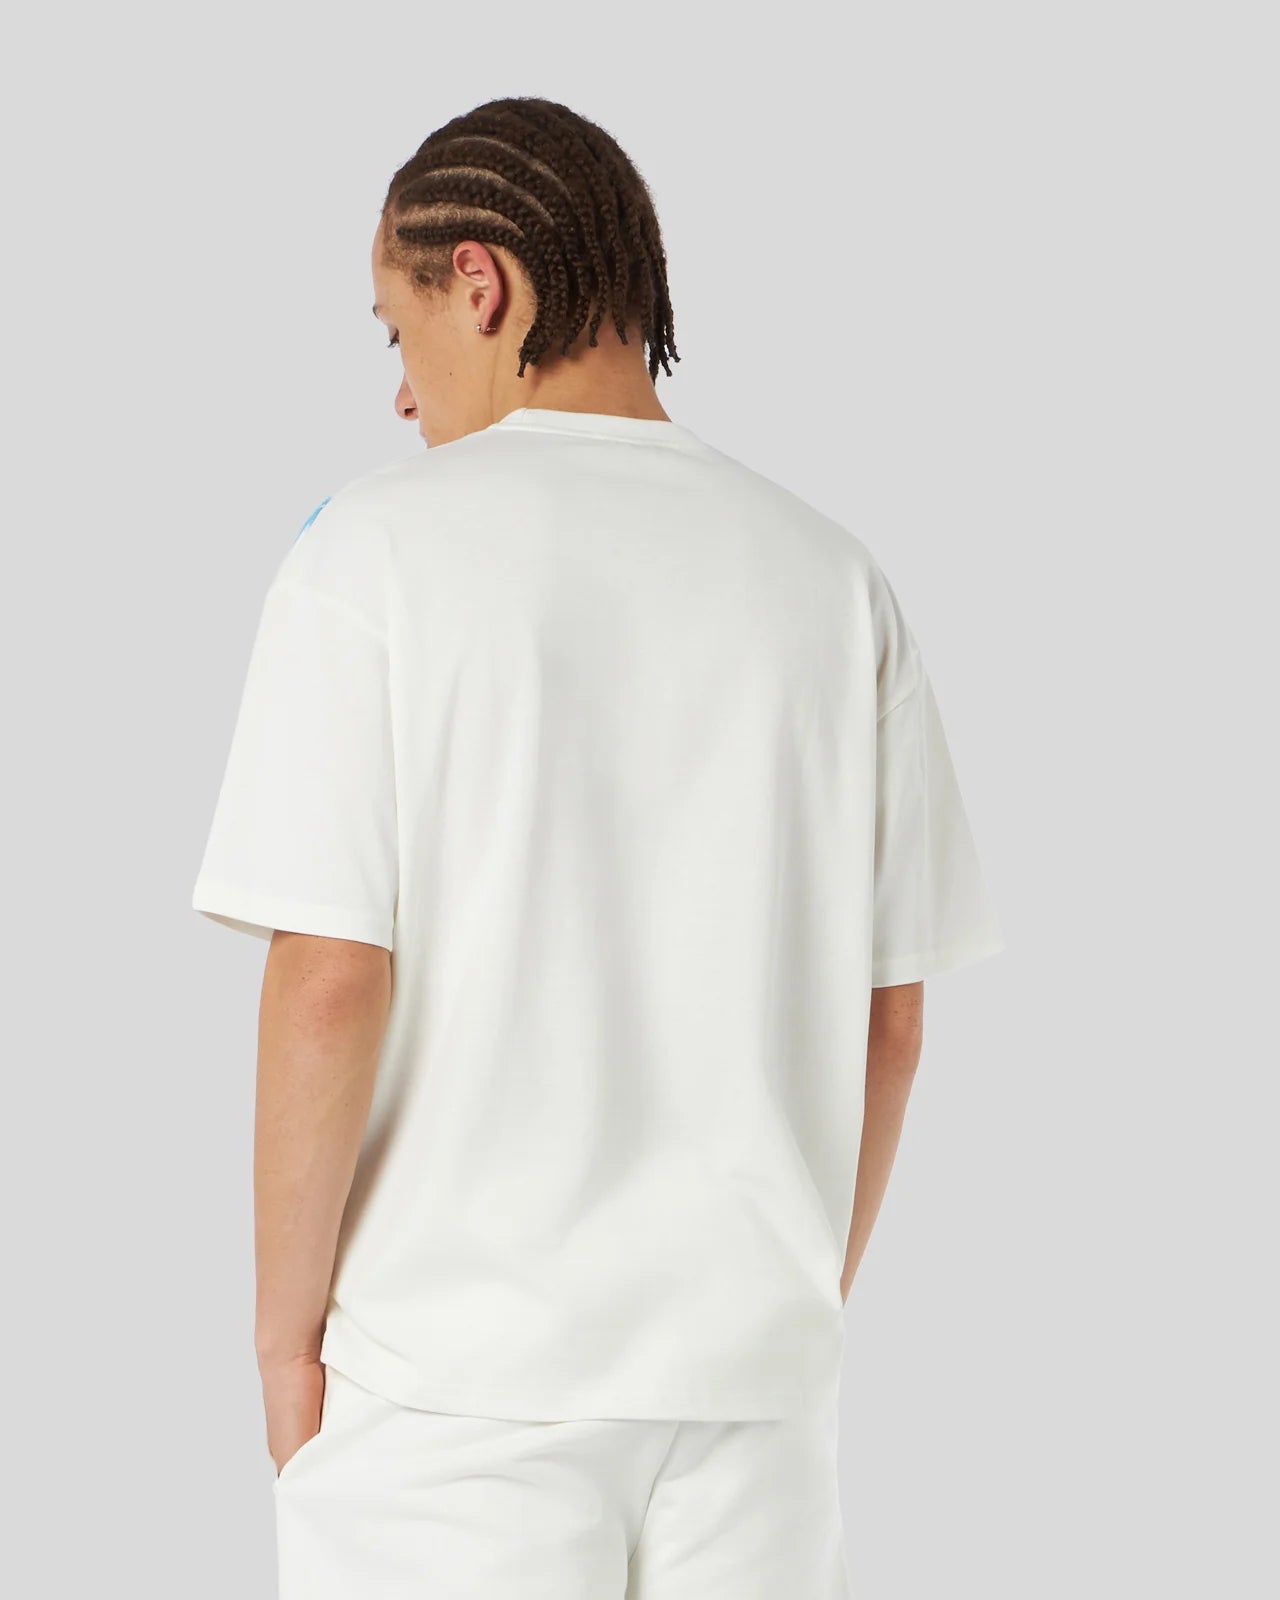 T-shirt Phobia bianca con stampa azzurri laterale